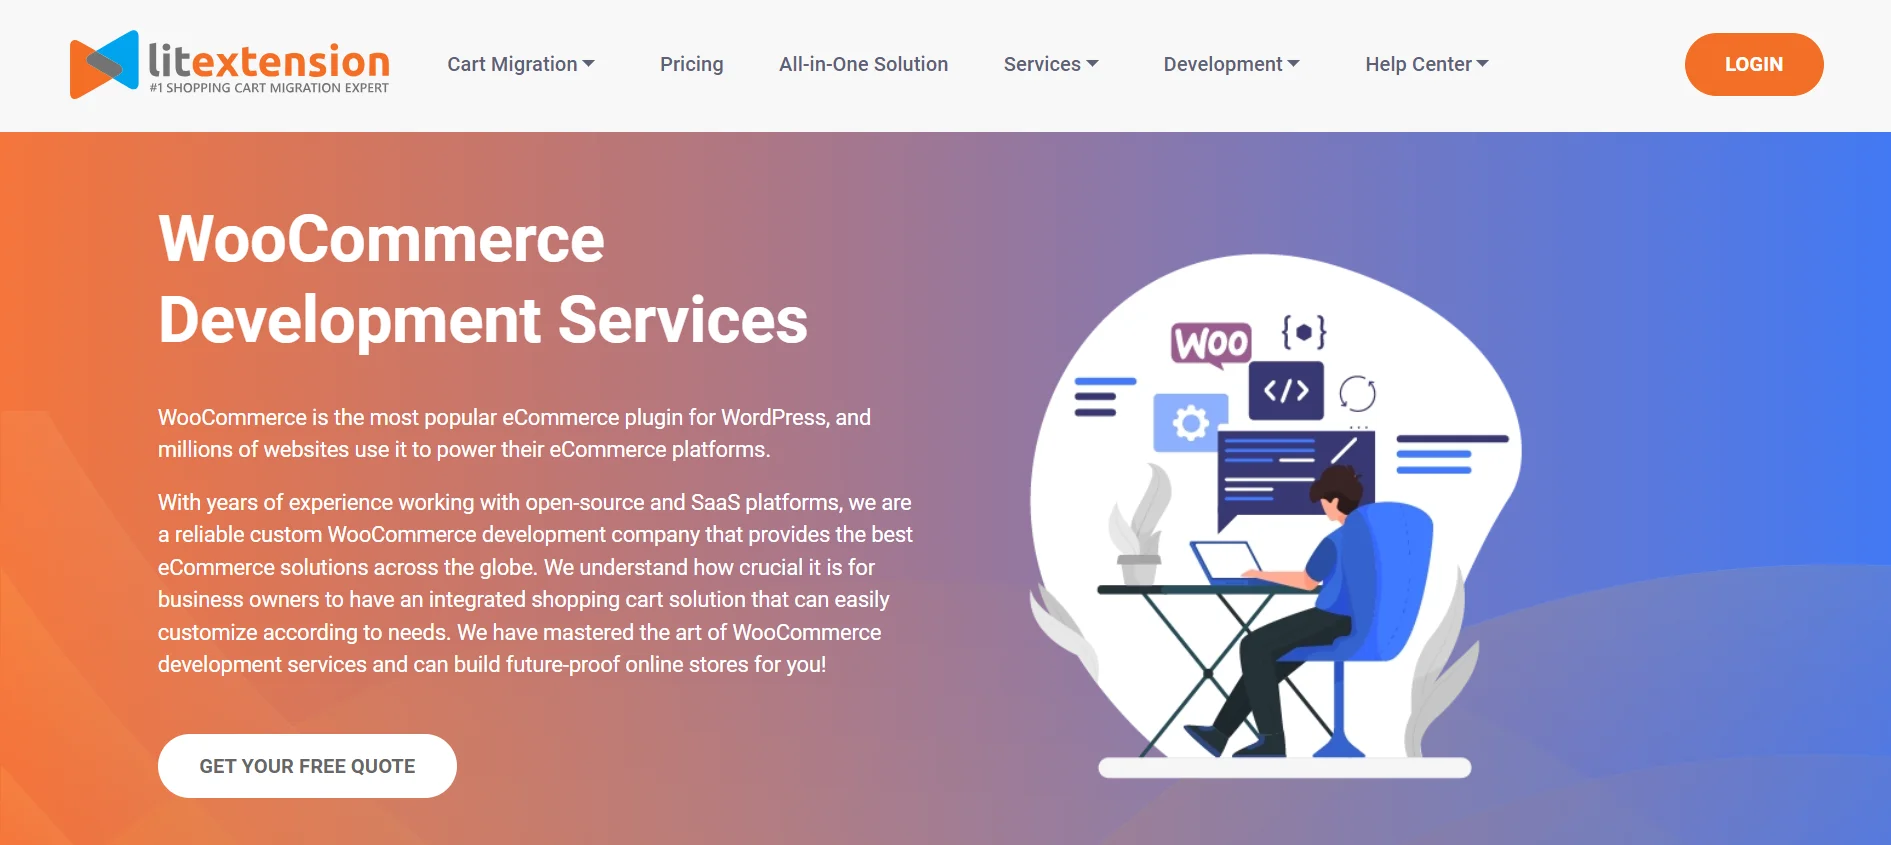 LitExtension’s WooCommerce Development Services